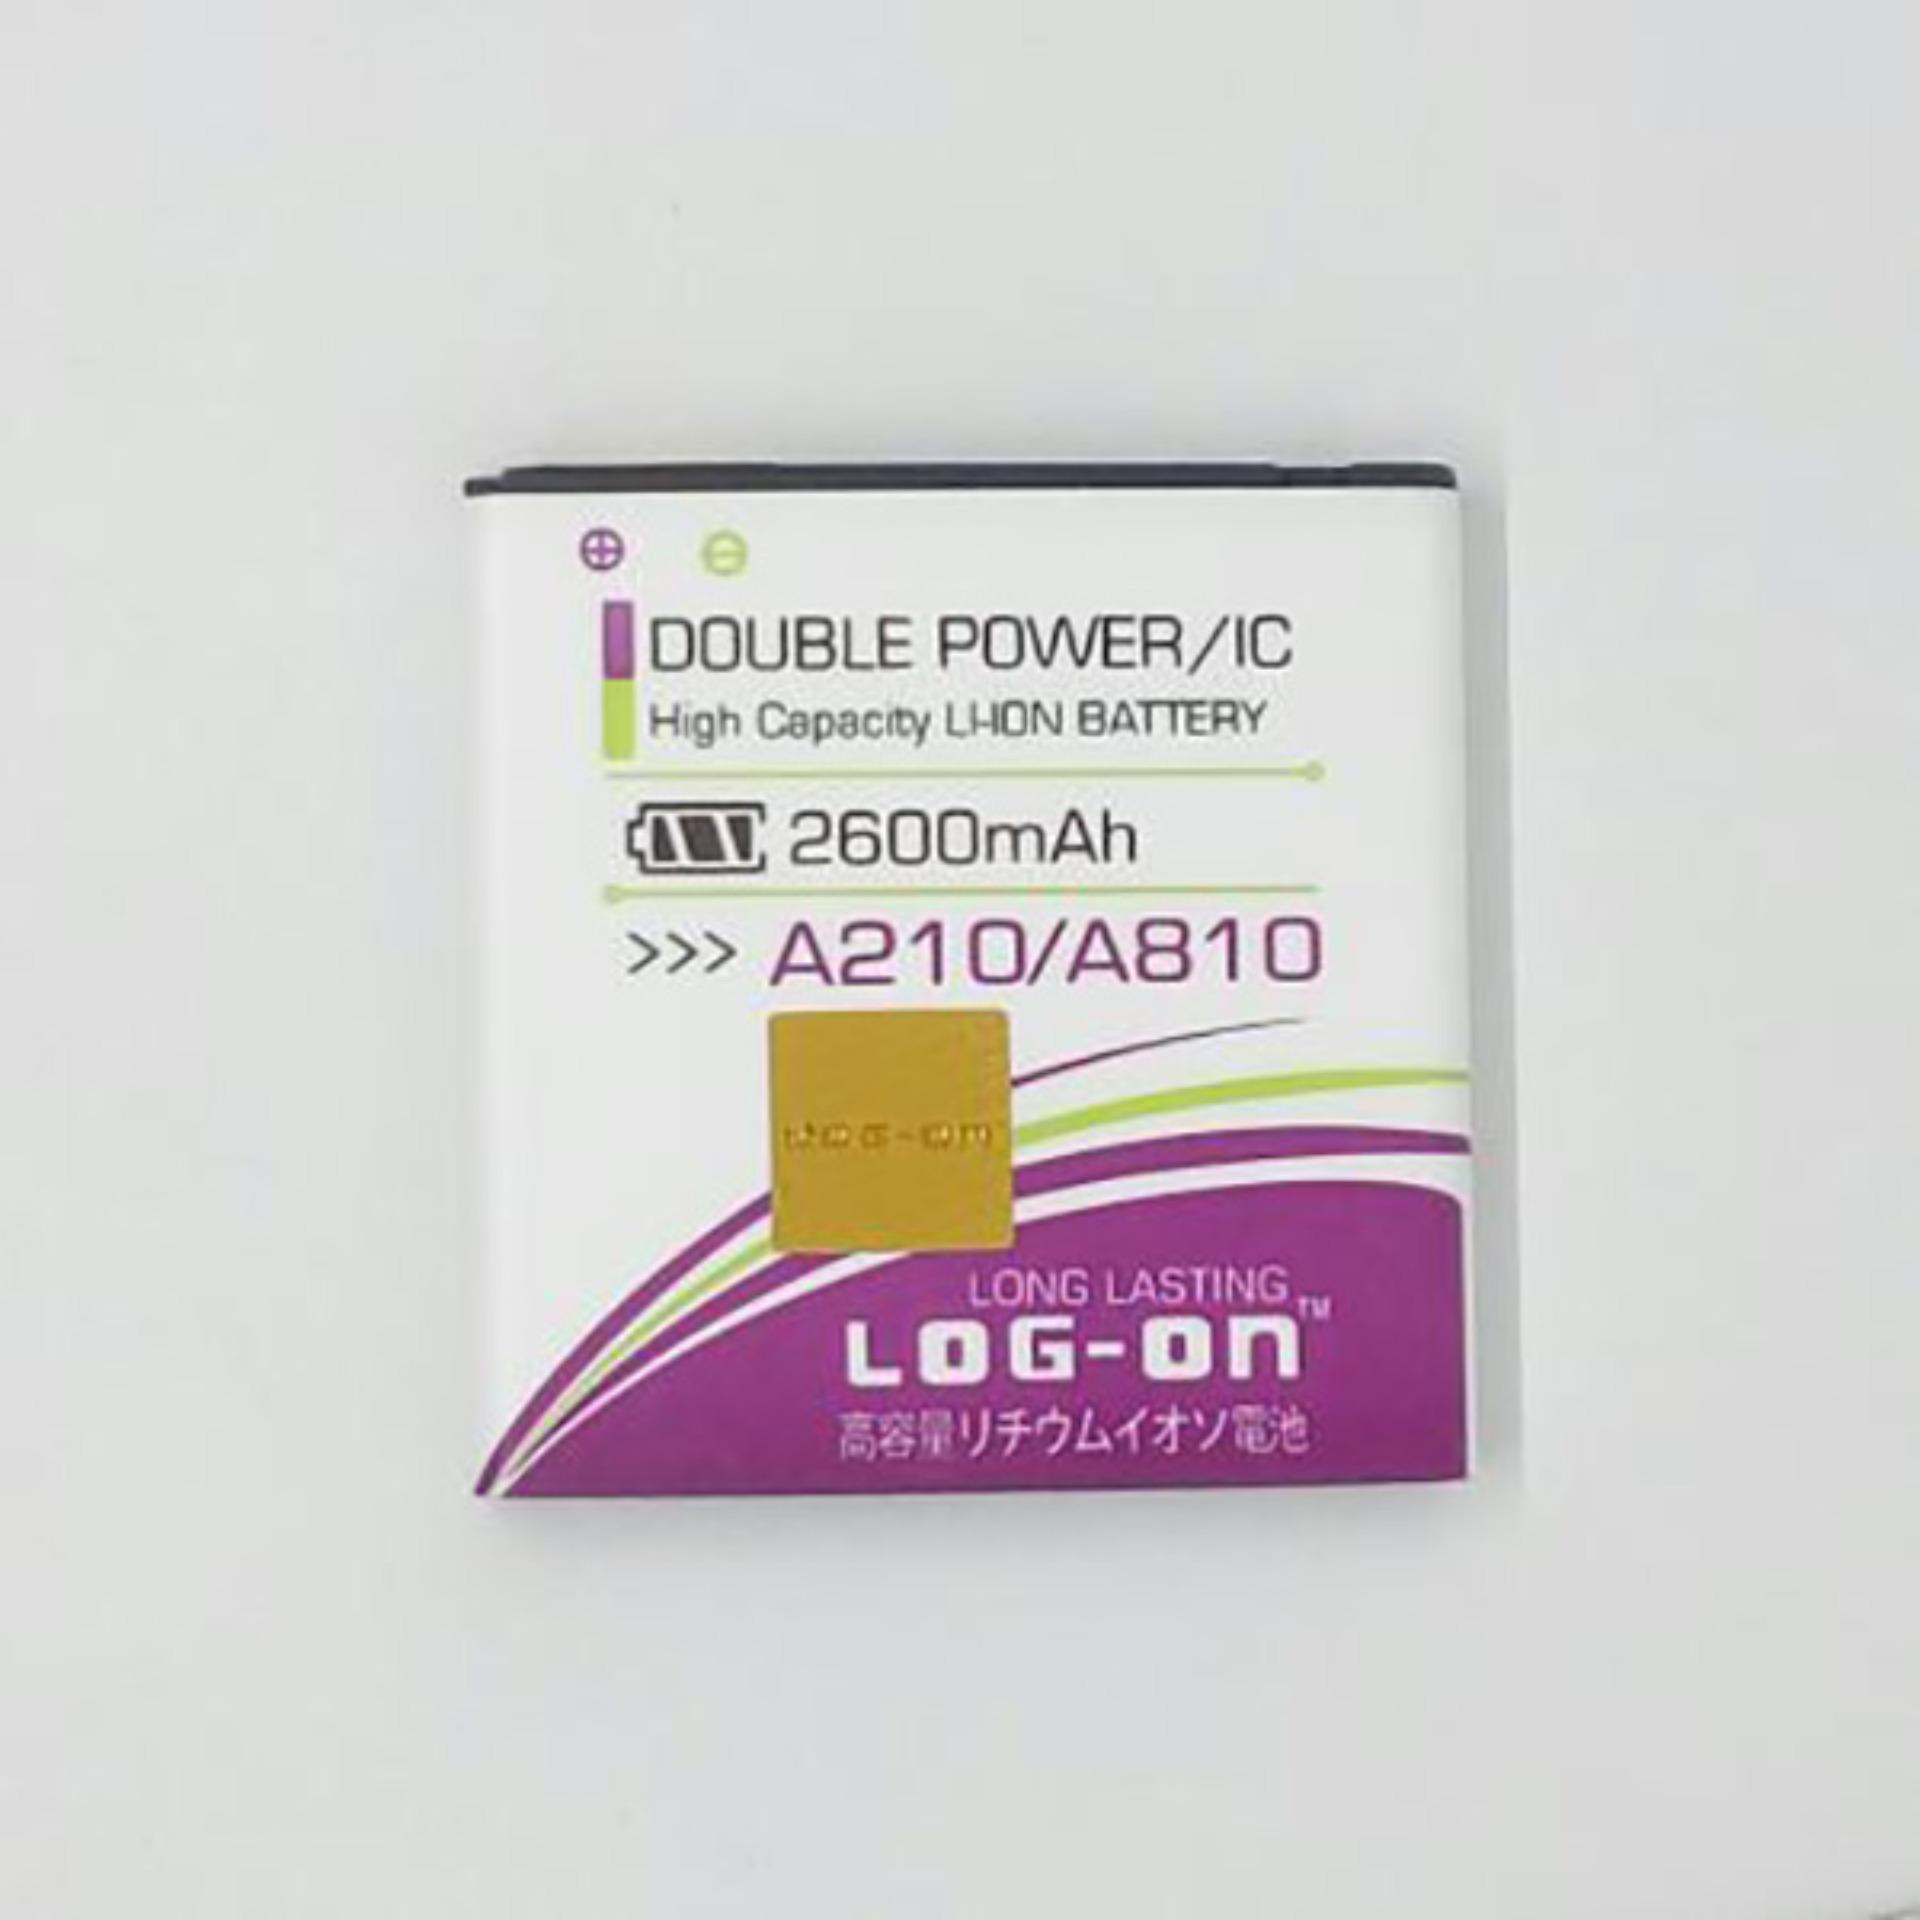 LOG-ON Battery For Mito A210/A810 2600mAh - Double Power & IC - Garansi 6 Bulan